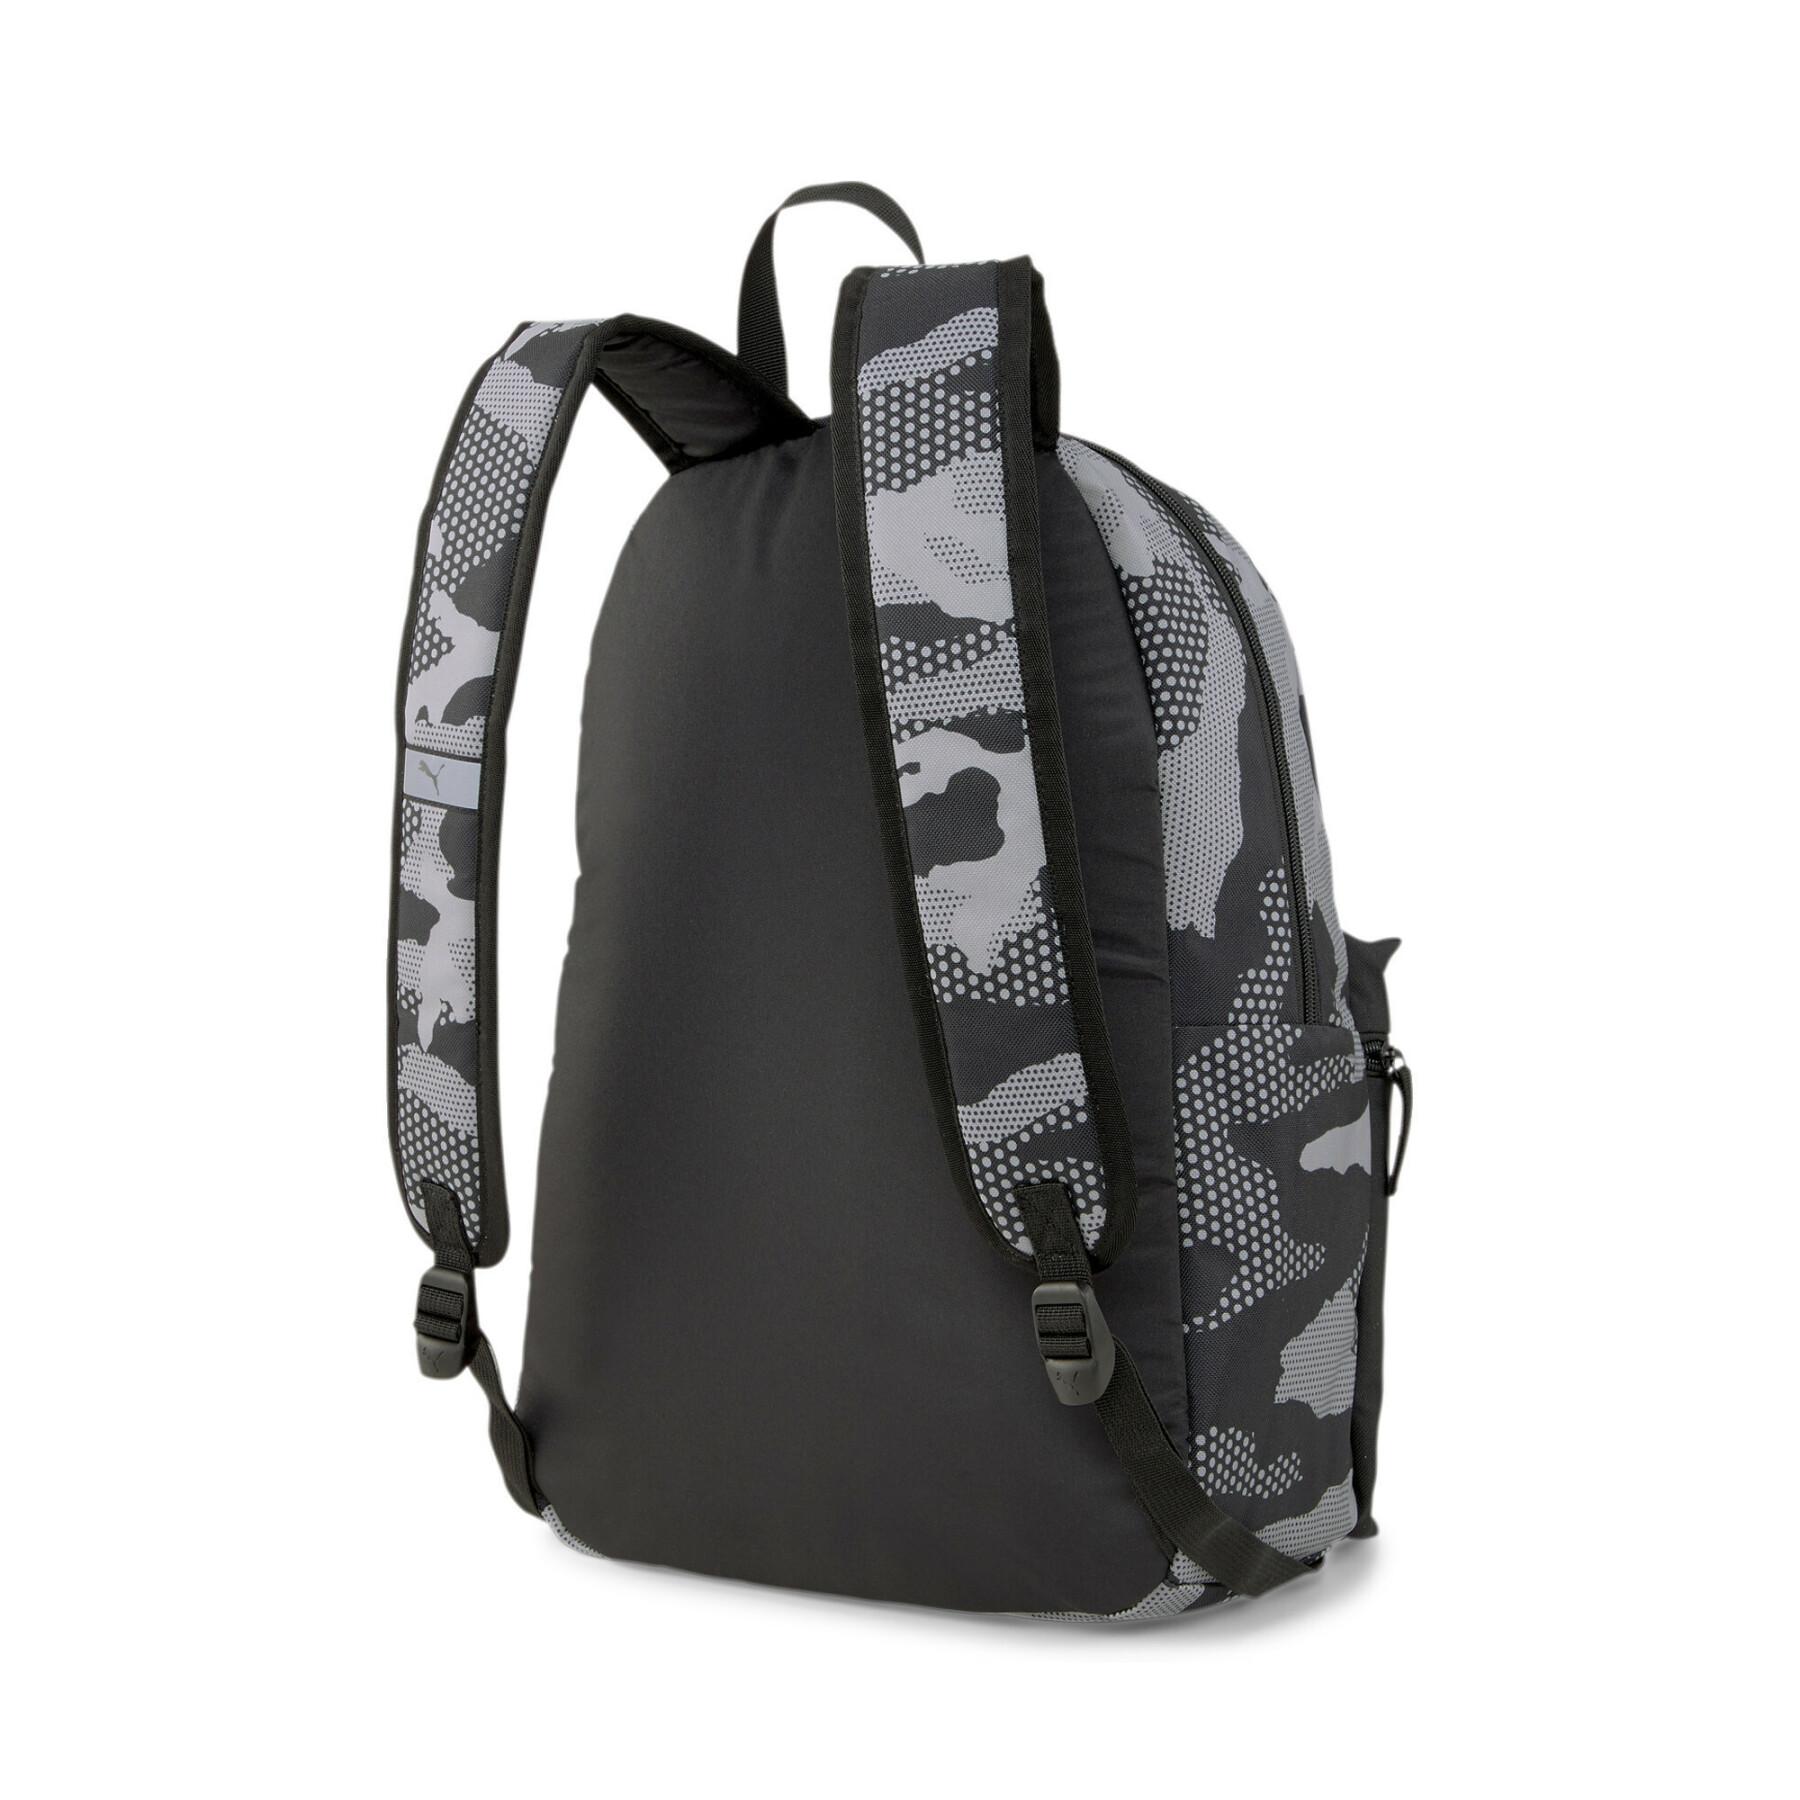 Backpack Puma Phase Aop